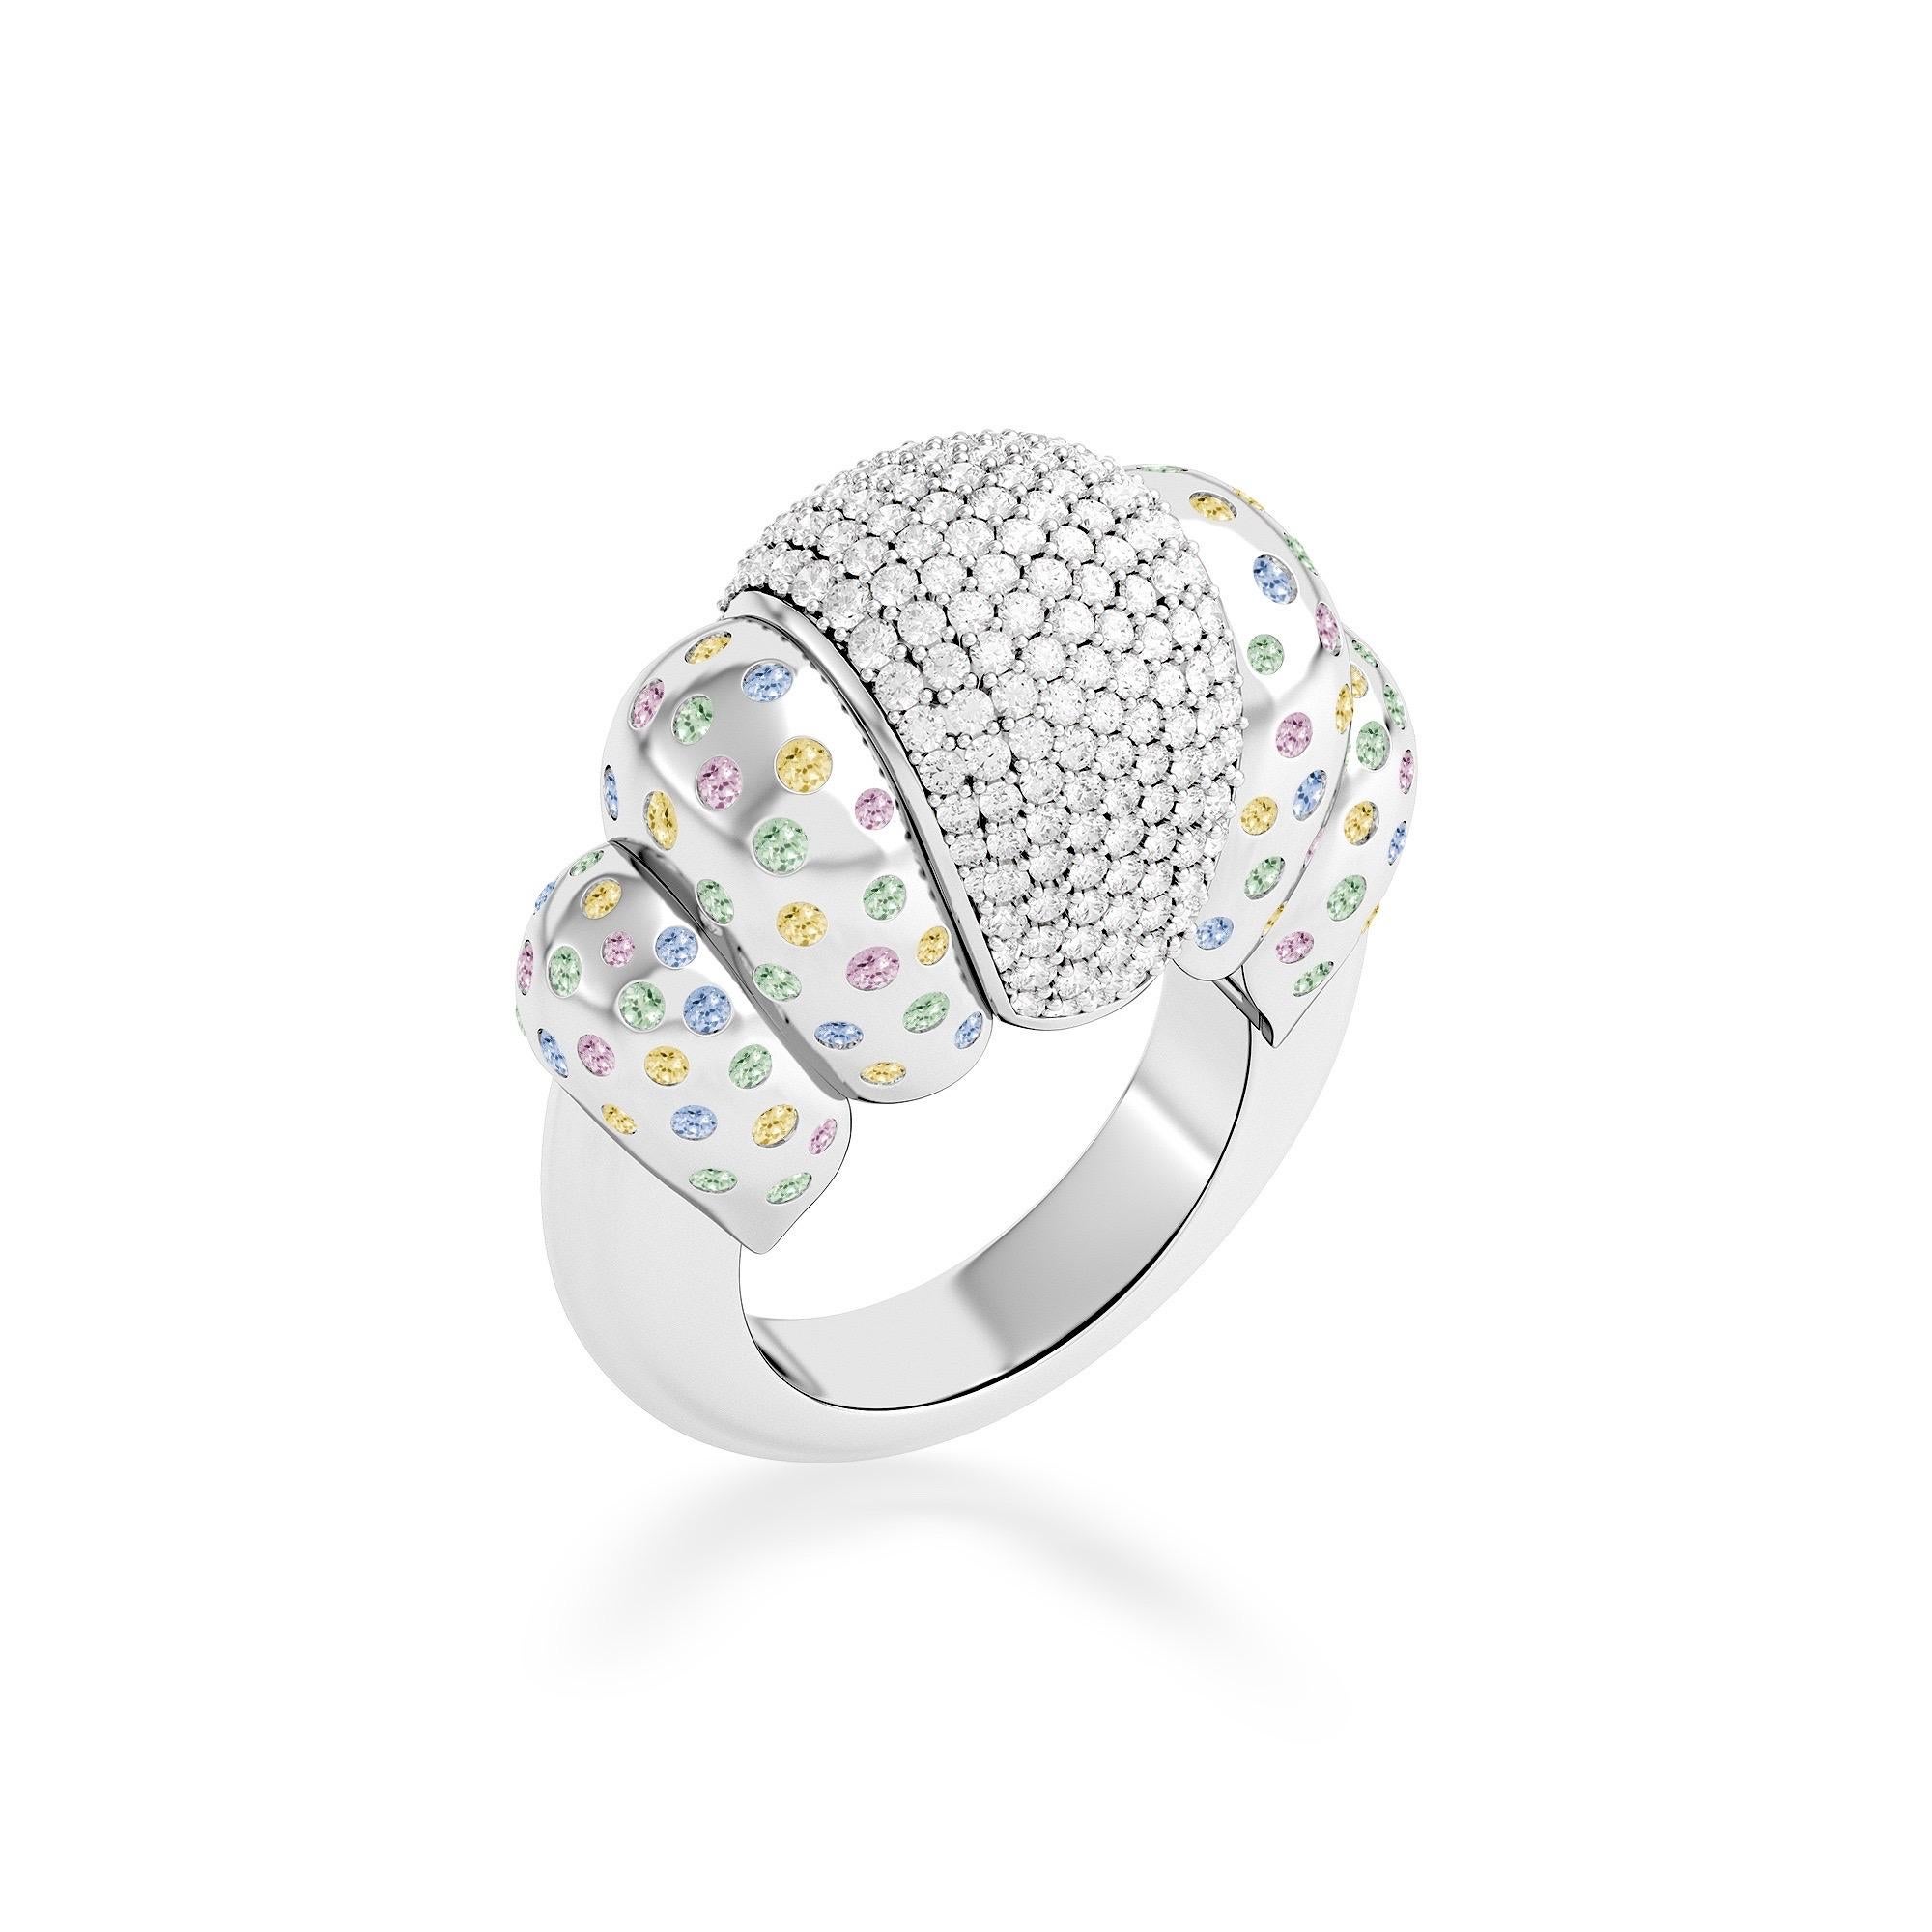 Ruben Manuel Designs “Spring” ladies ring.  18K WG Shrimp ring with pastel sapphires and VS white diamonds.  3.61 ctw.  Size 7.